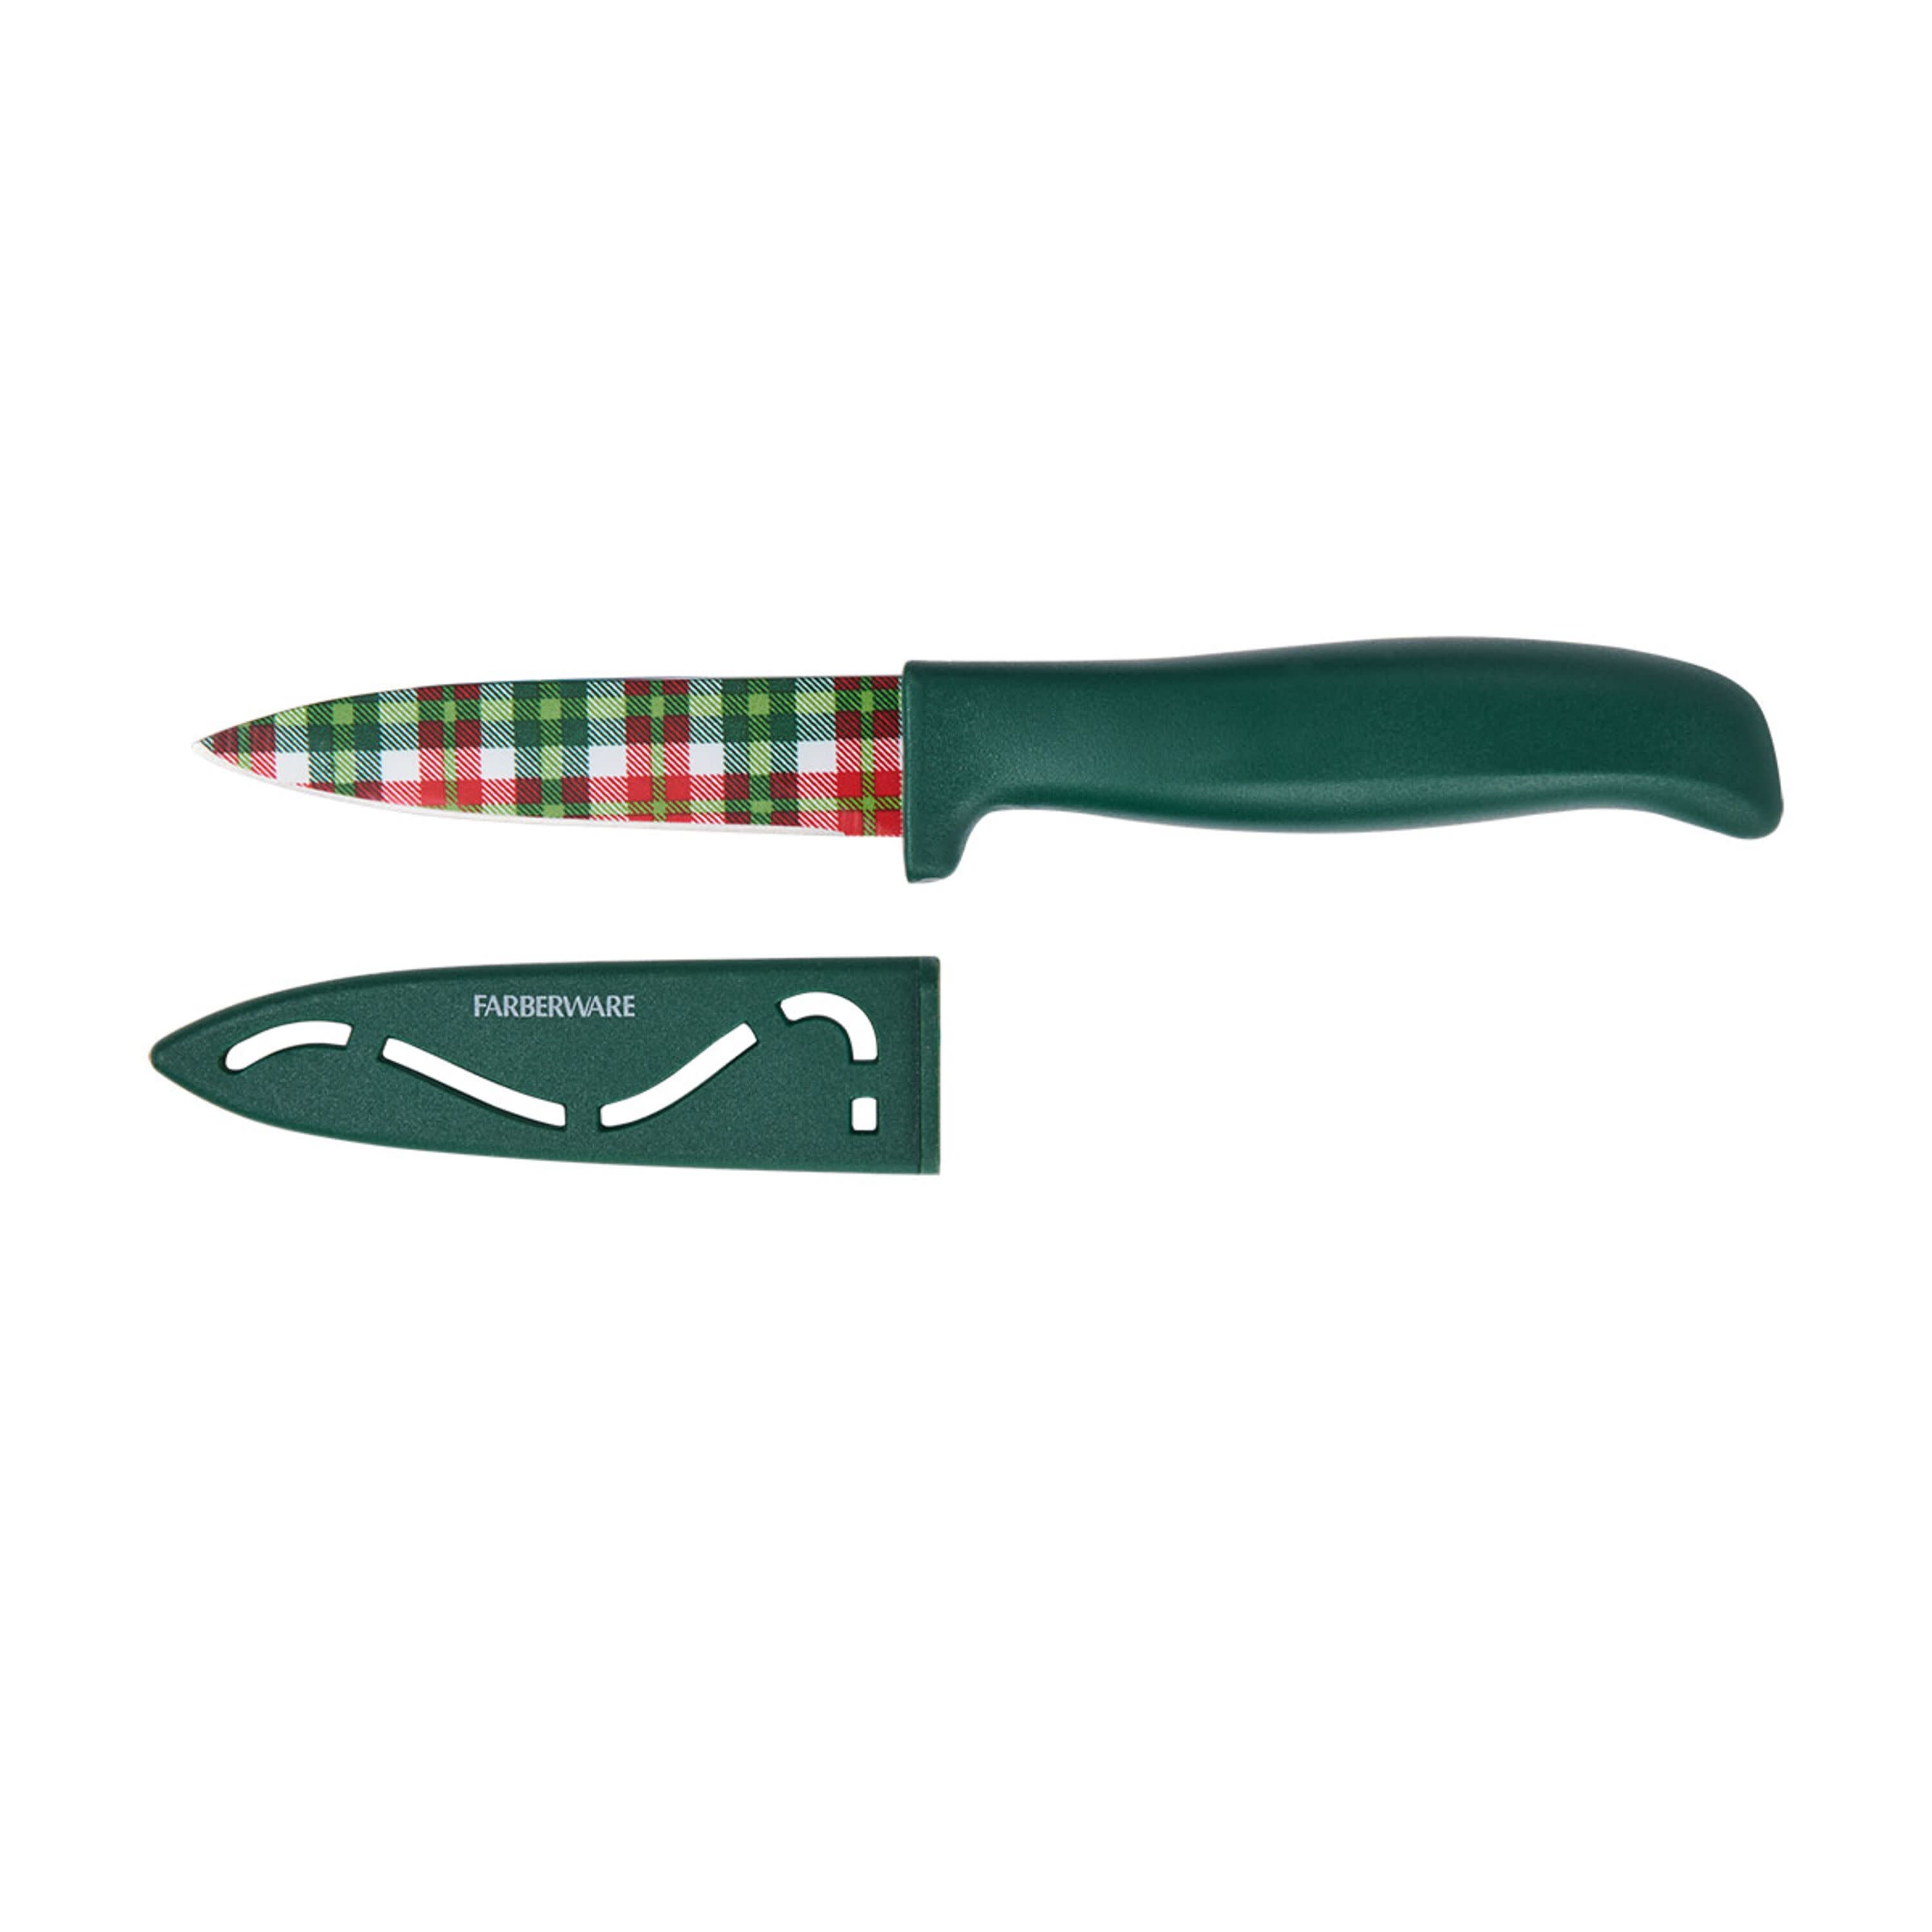 BenchMark Ceramic Parer Knife, Green